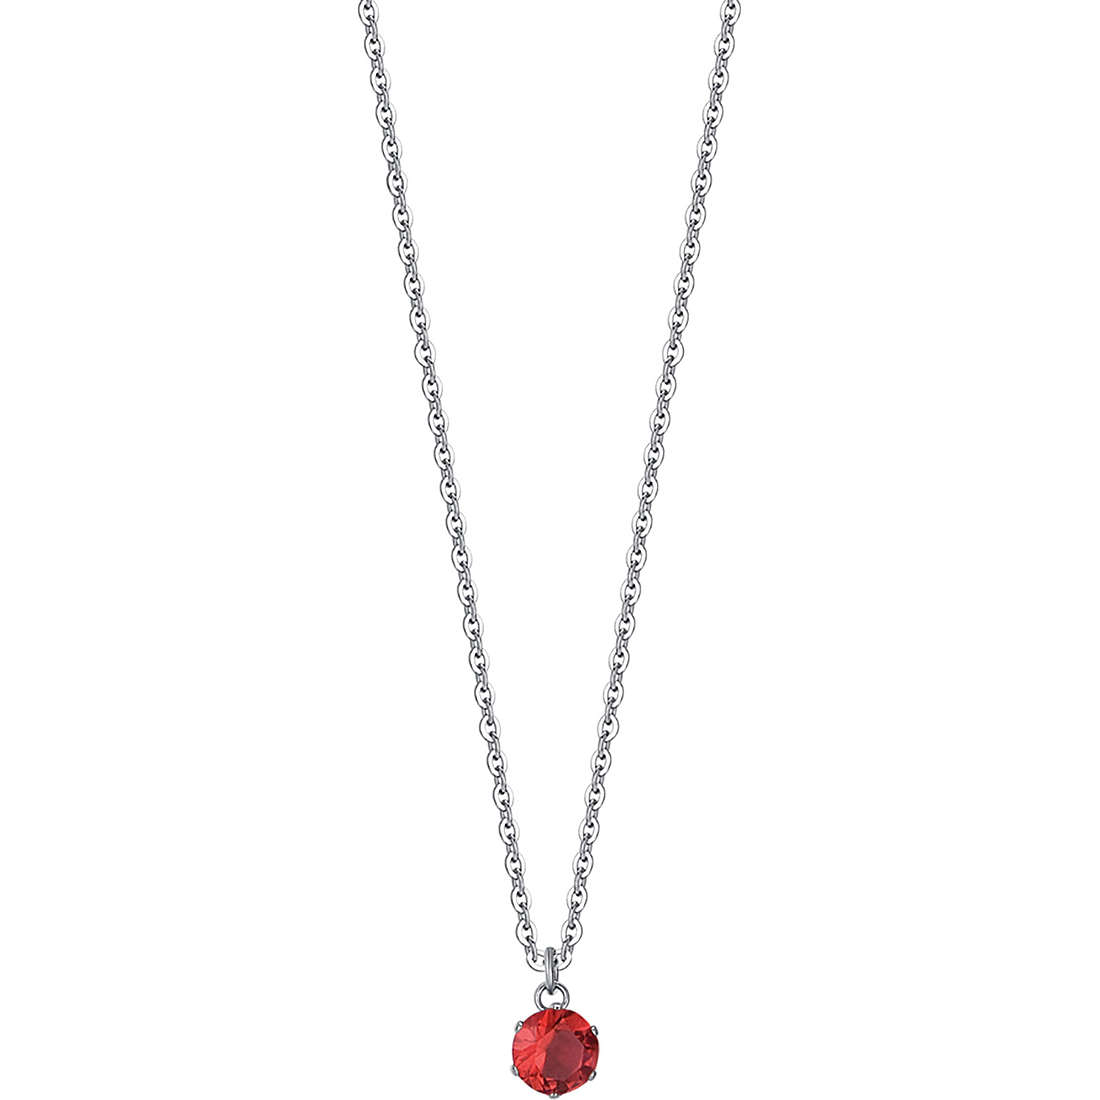 necklace Steel woman jewel Crystals CK1692